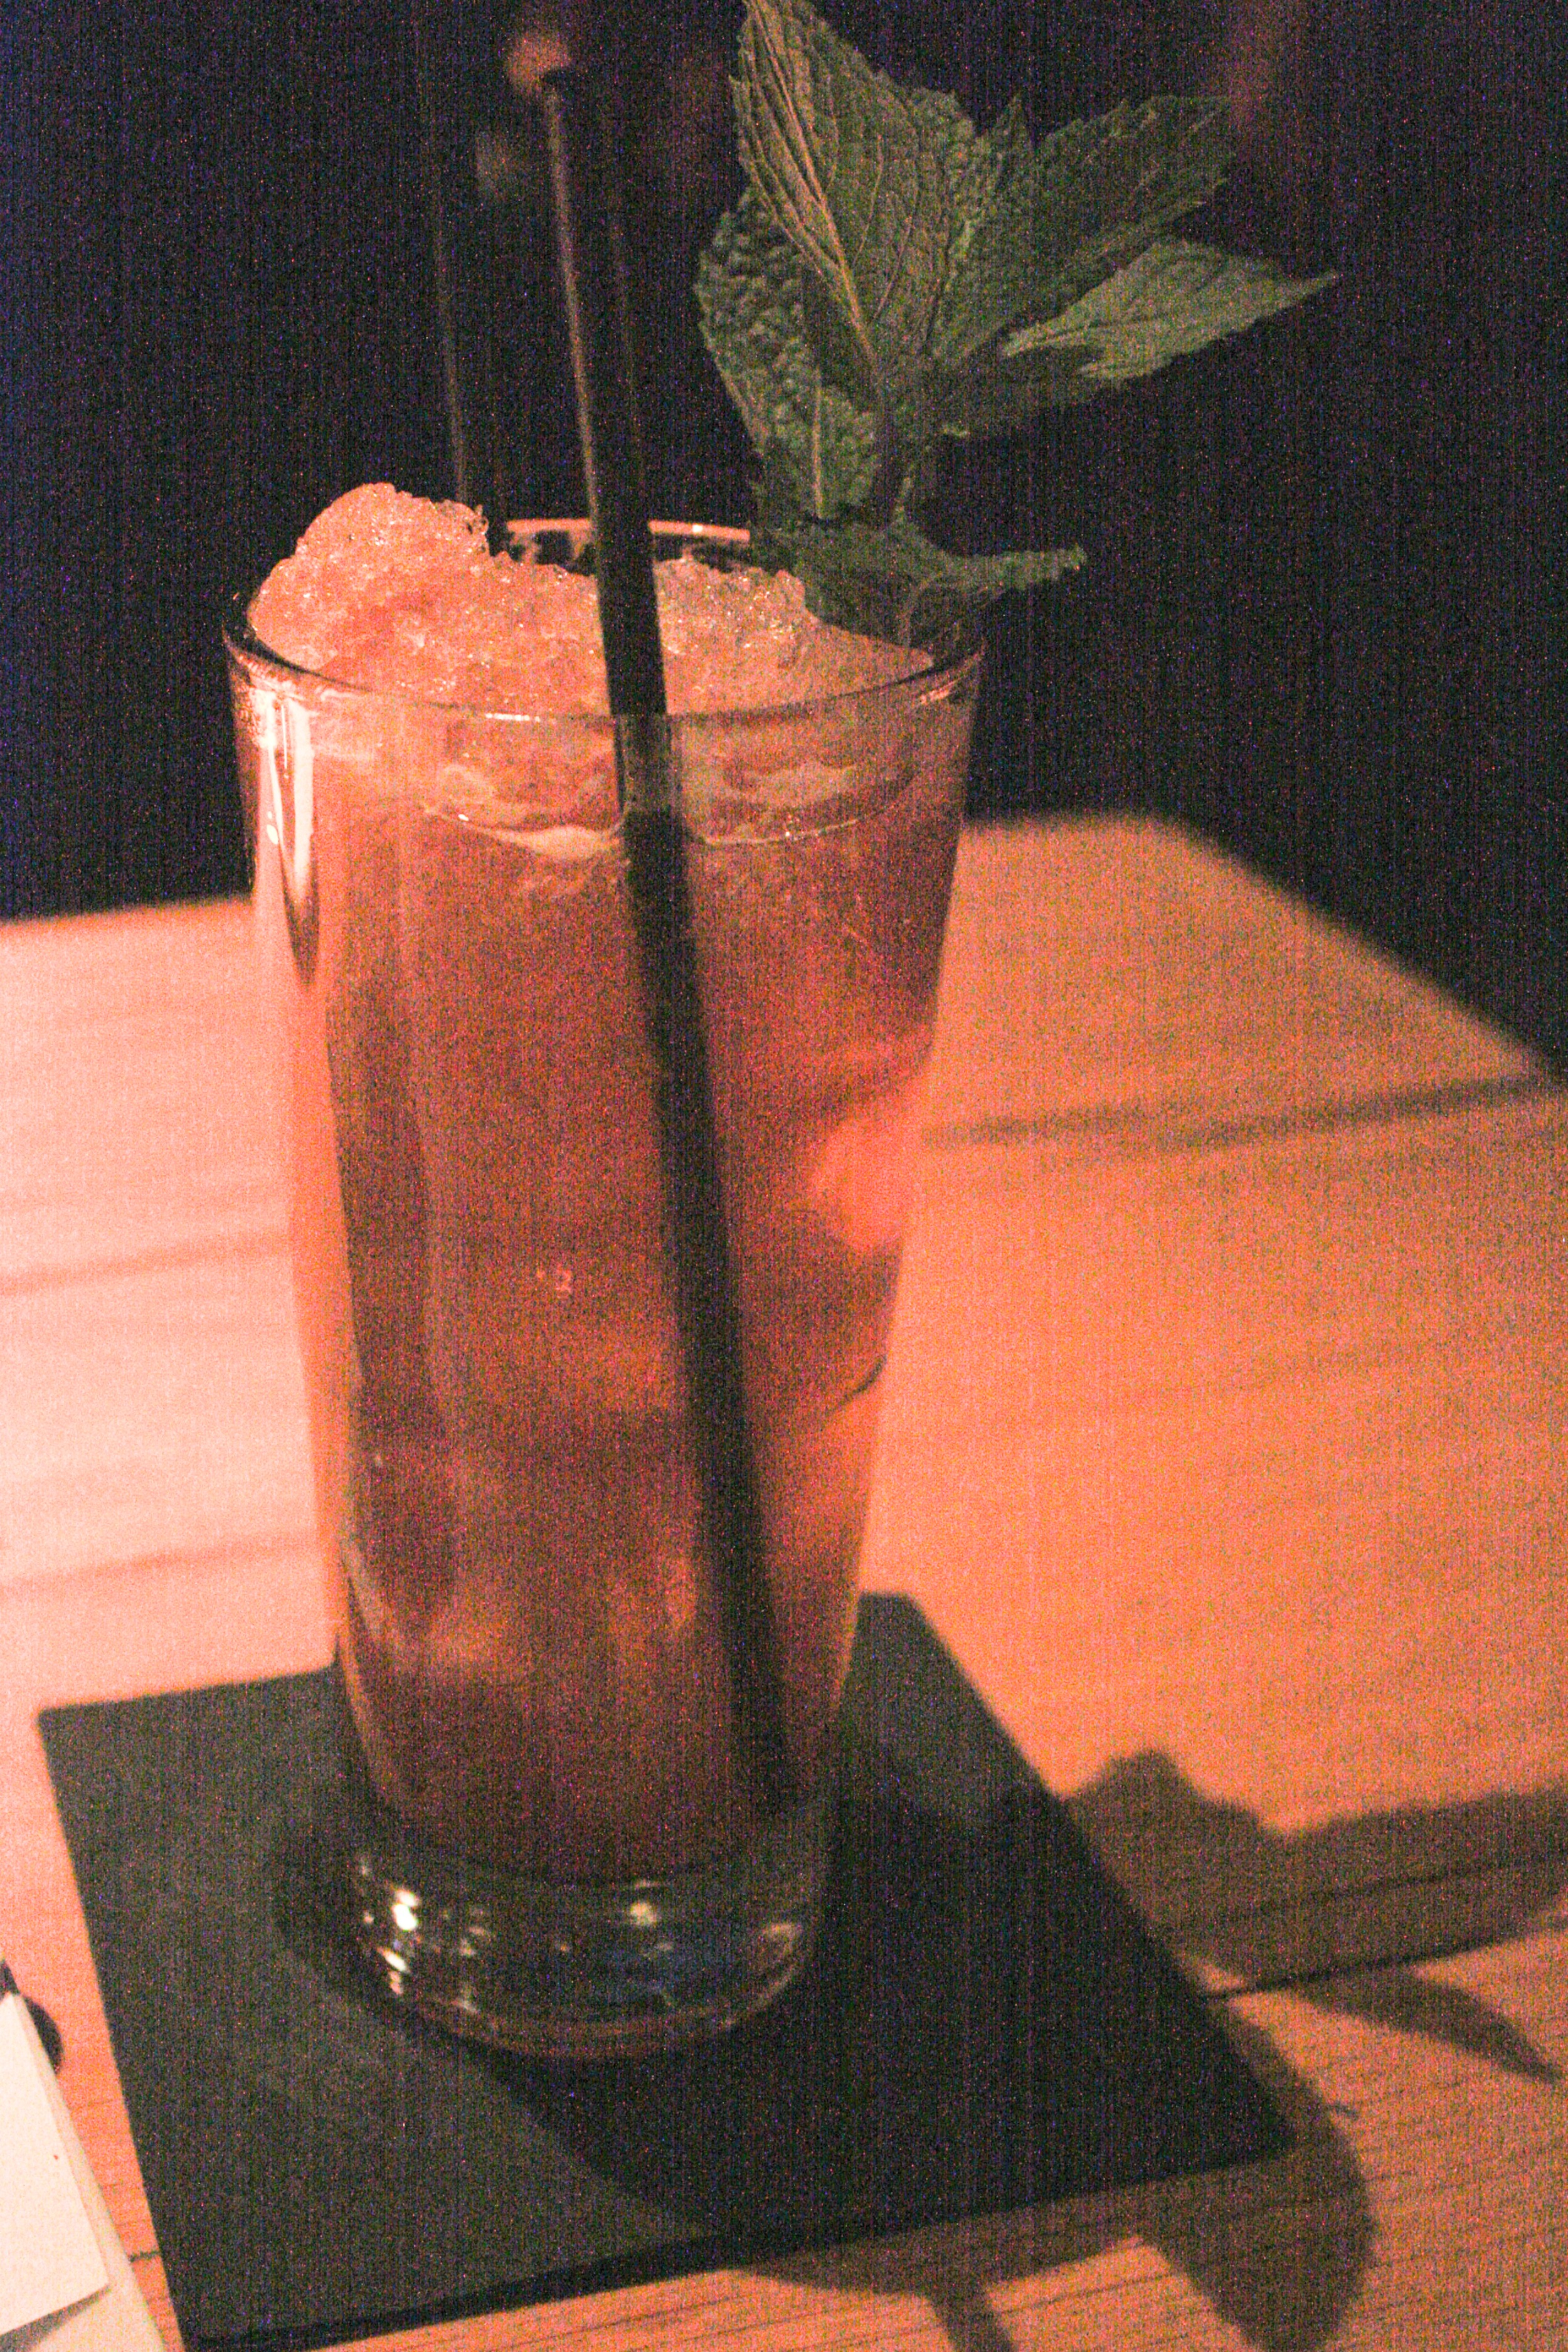 mesa cocktail